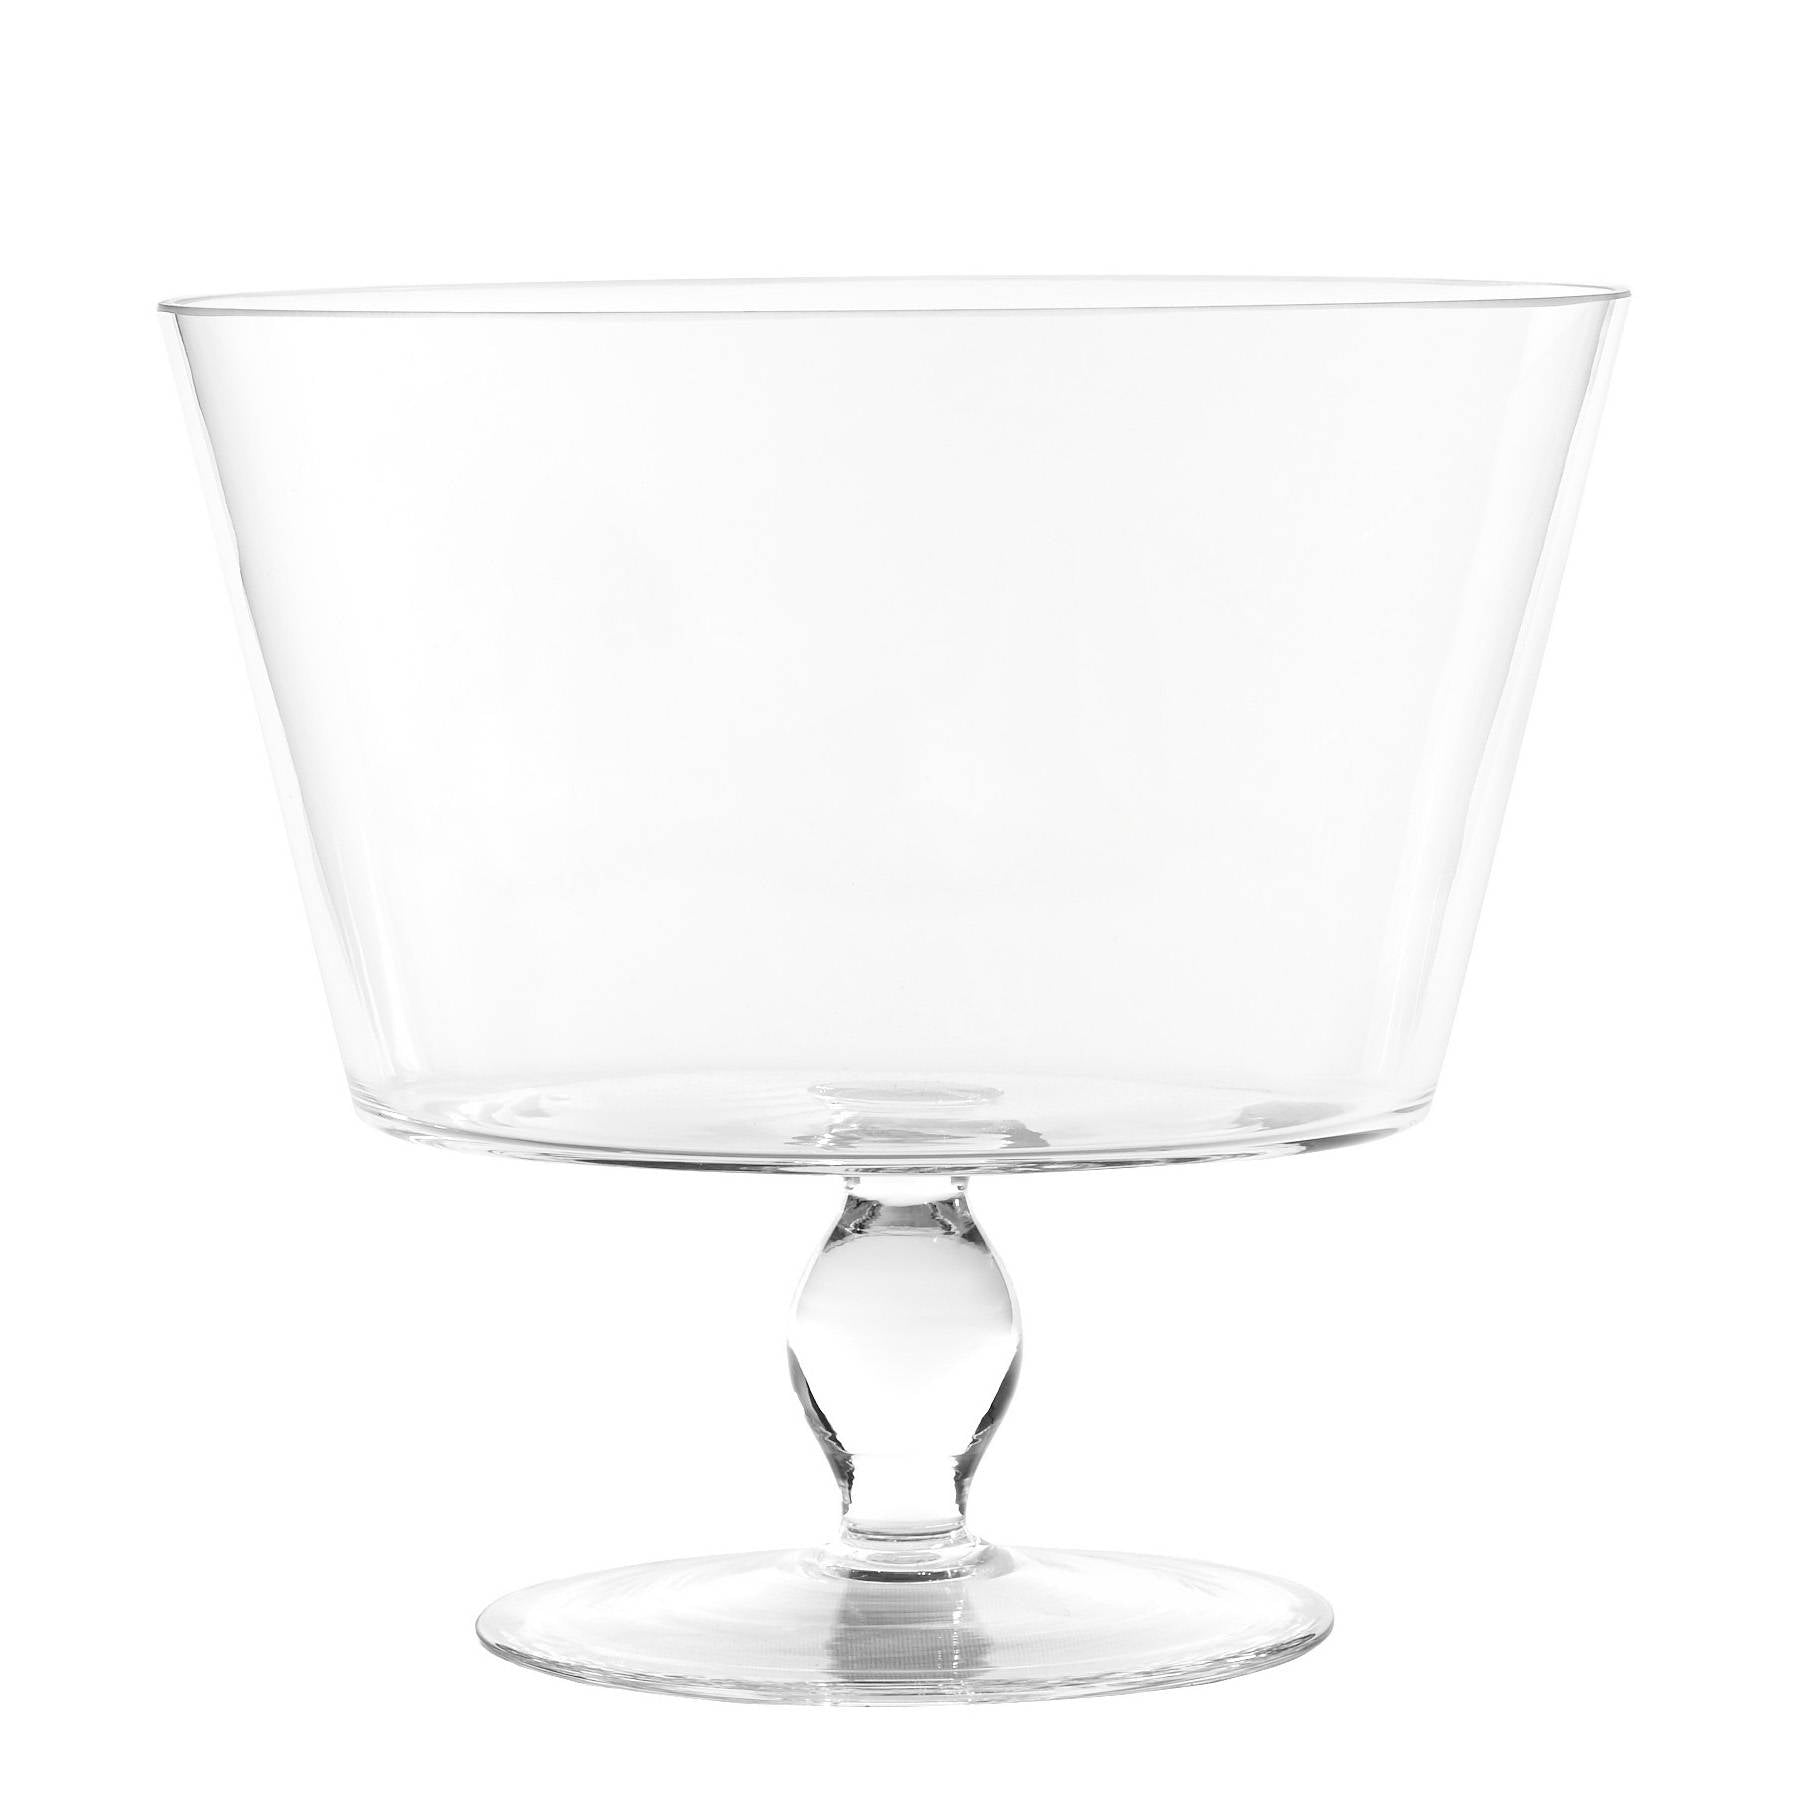 Tasse en verre transparent avec base